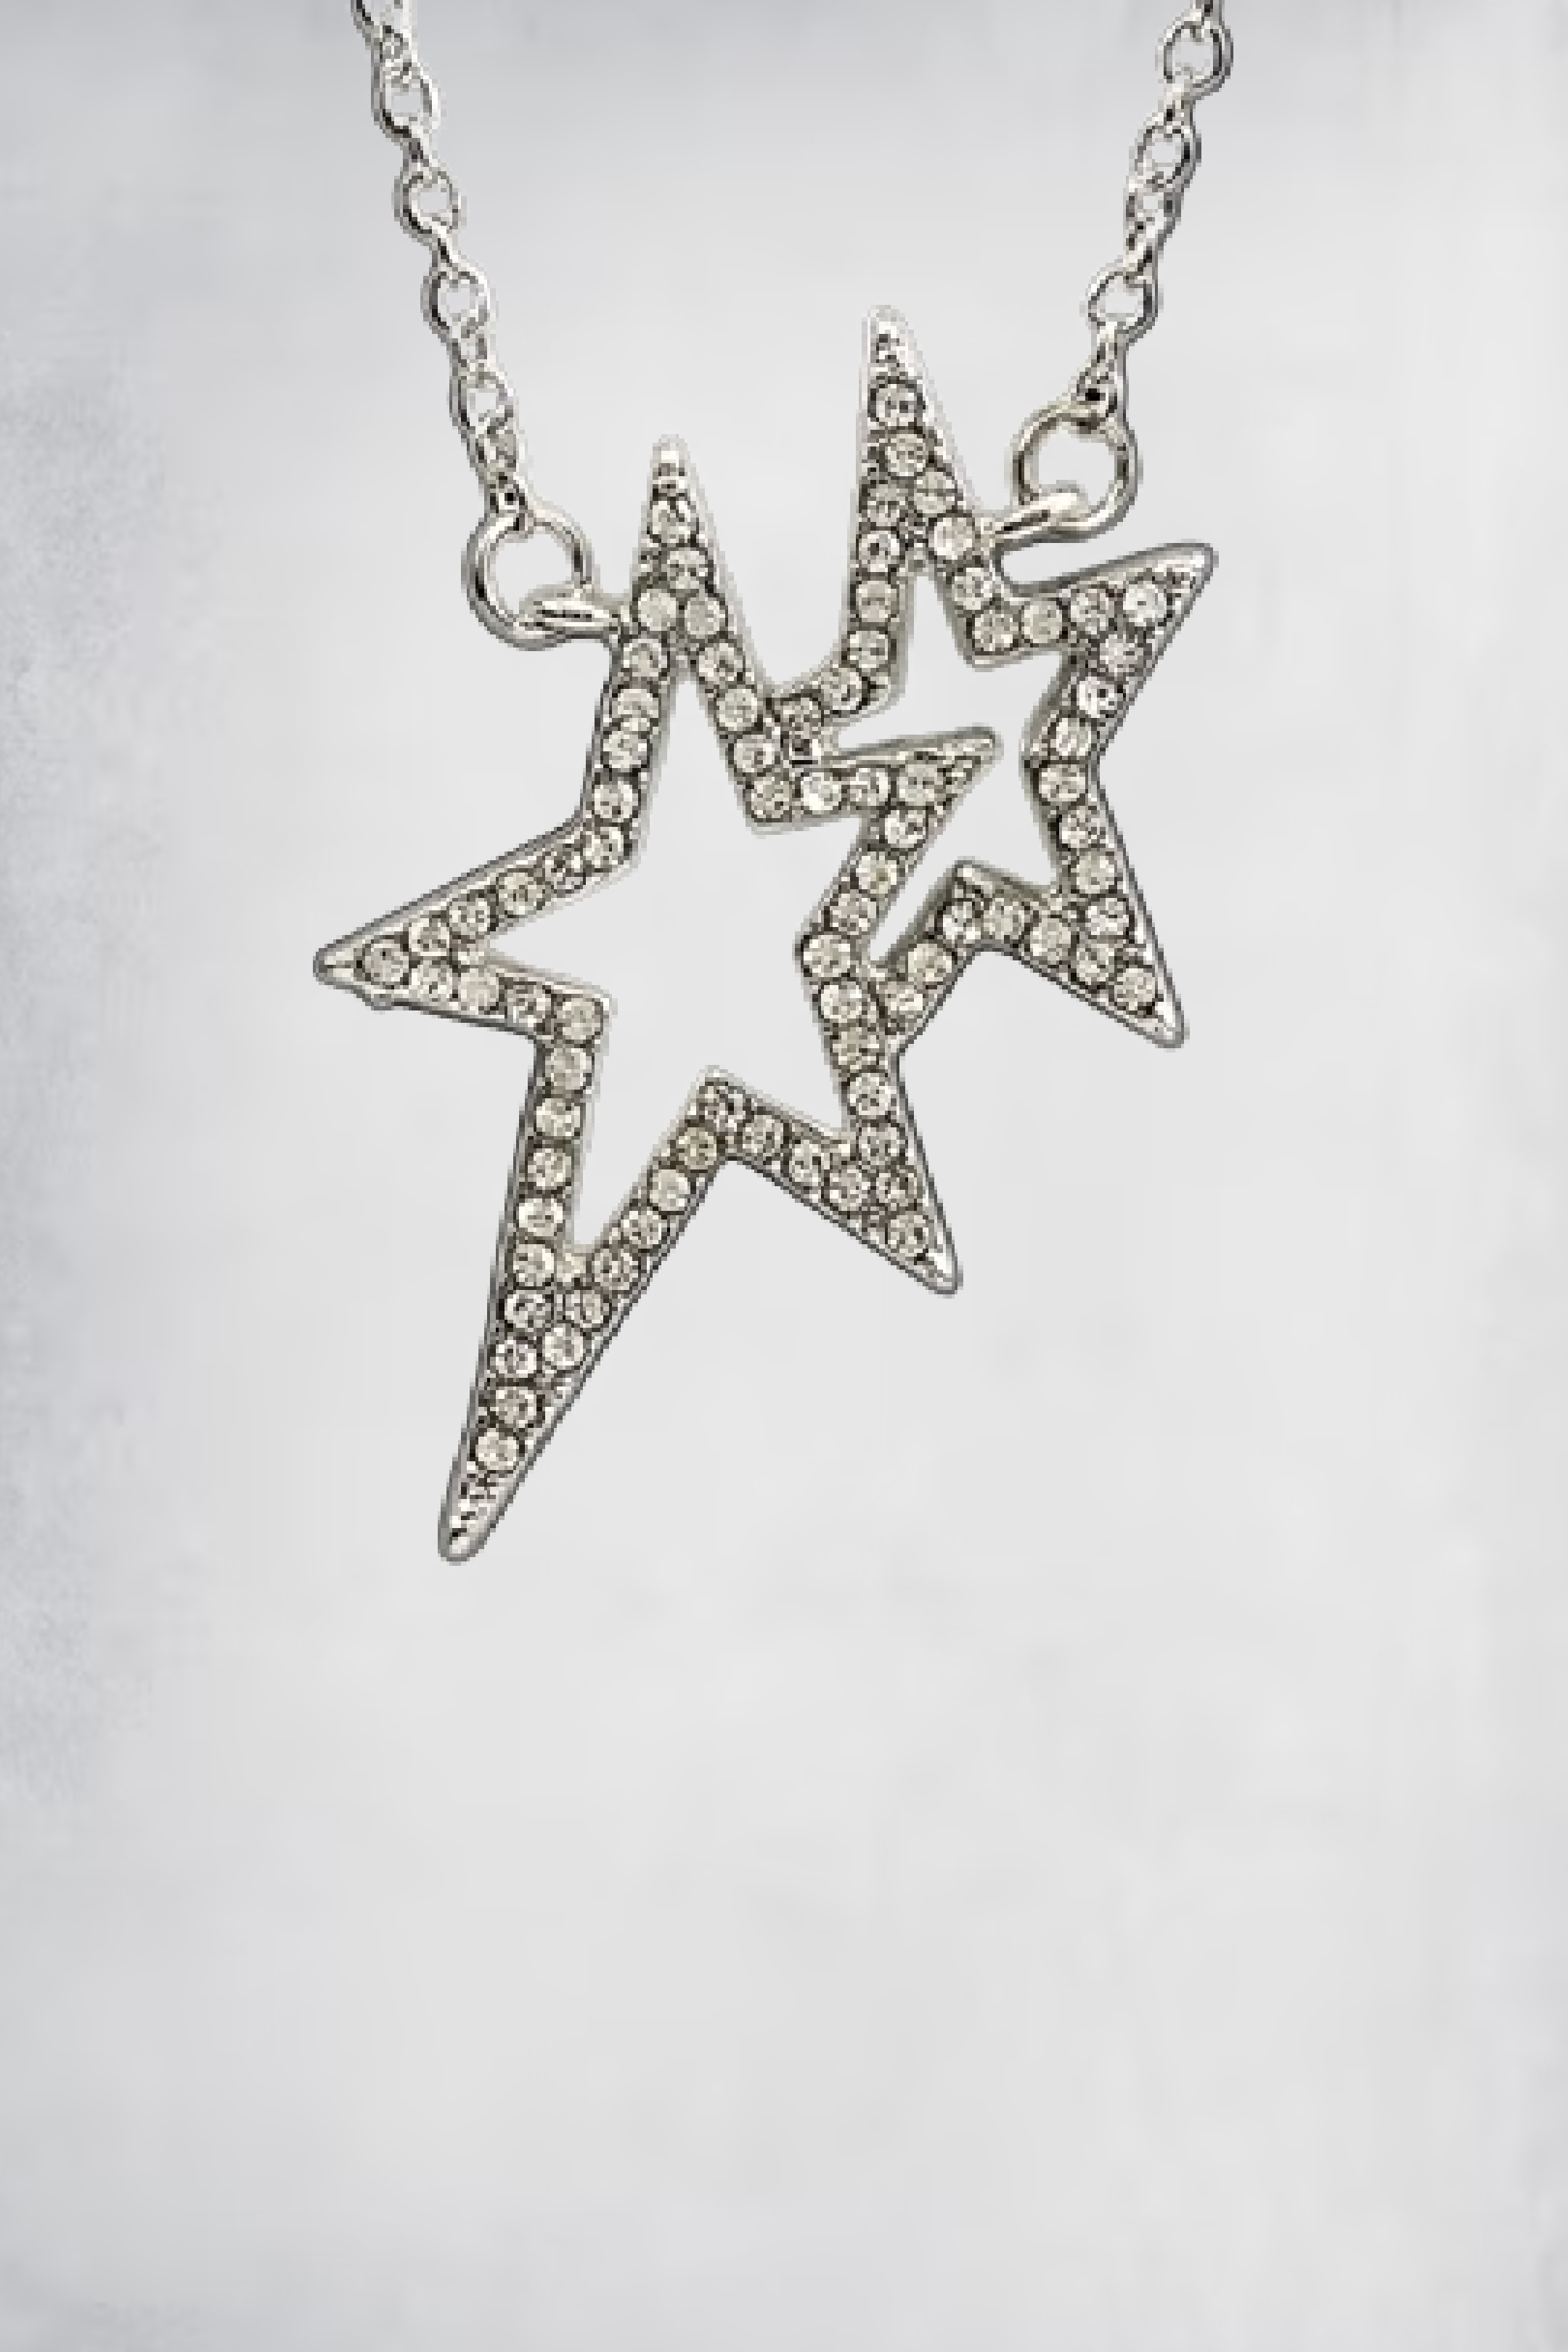 Stars chain